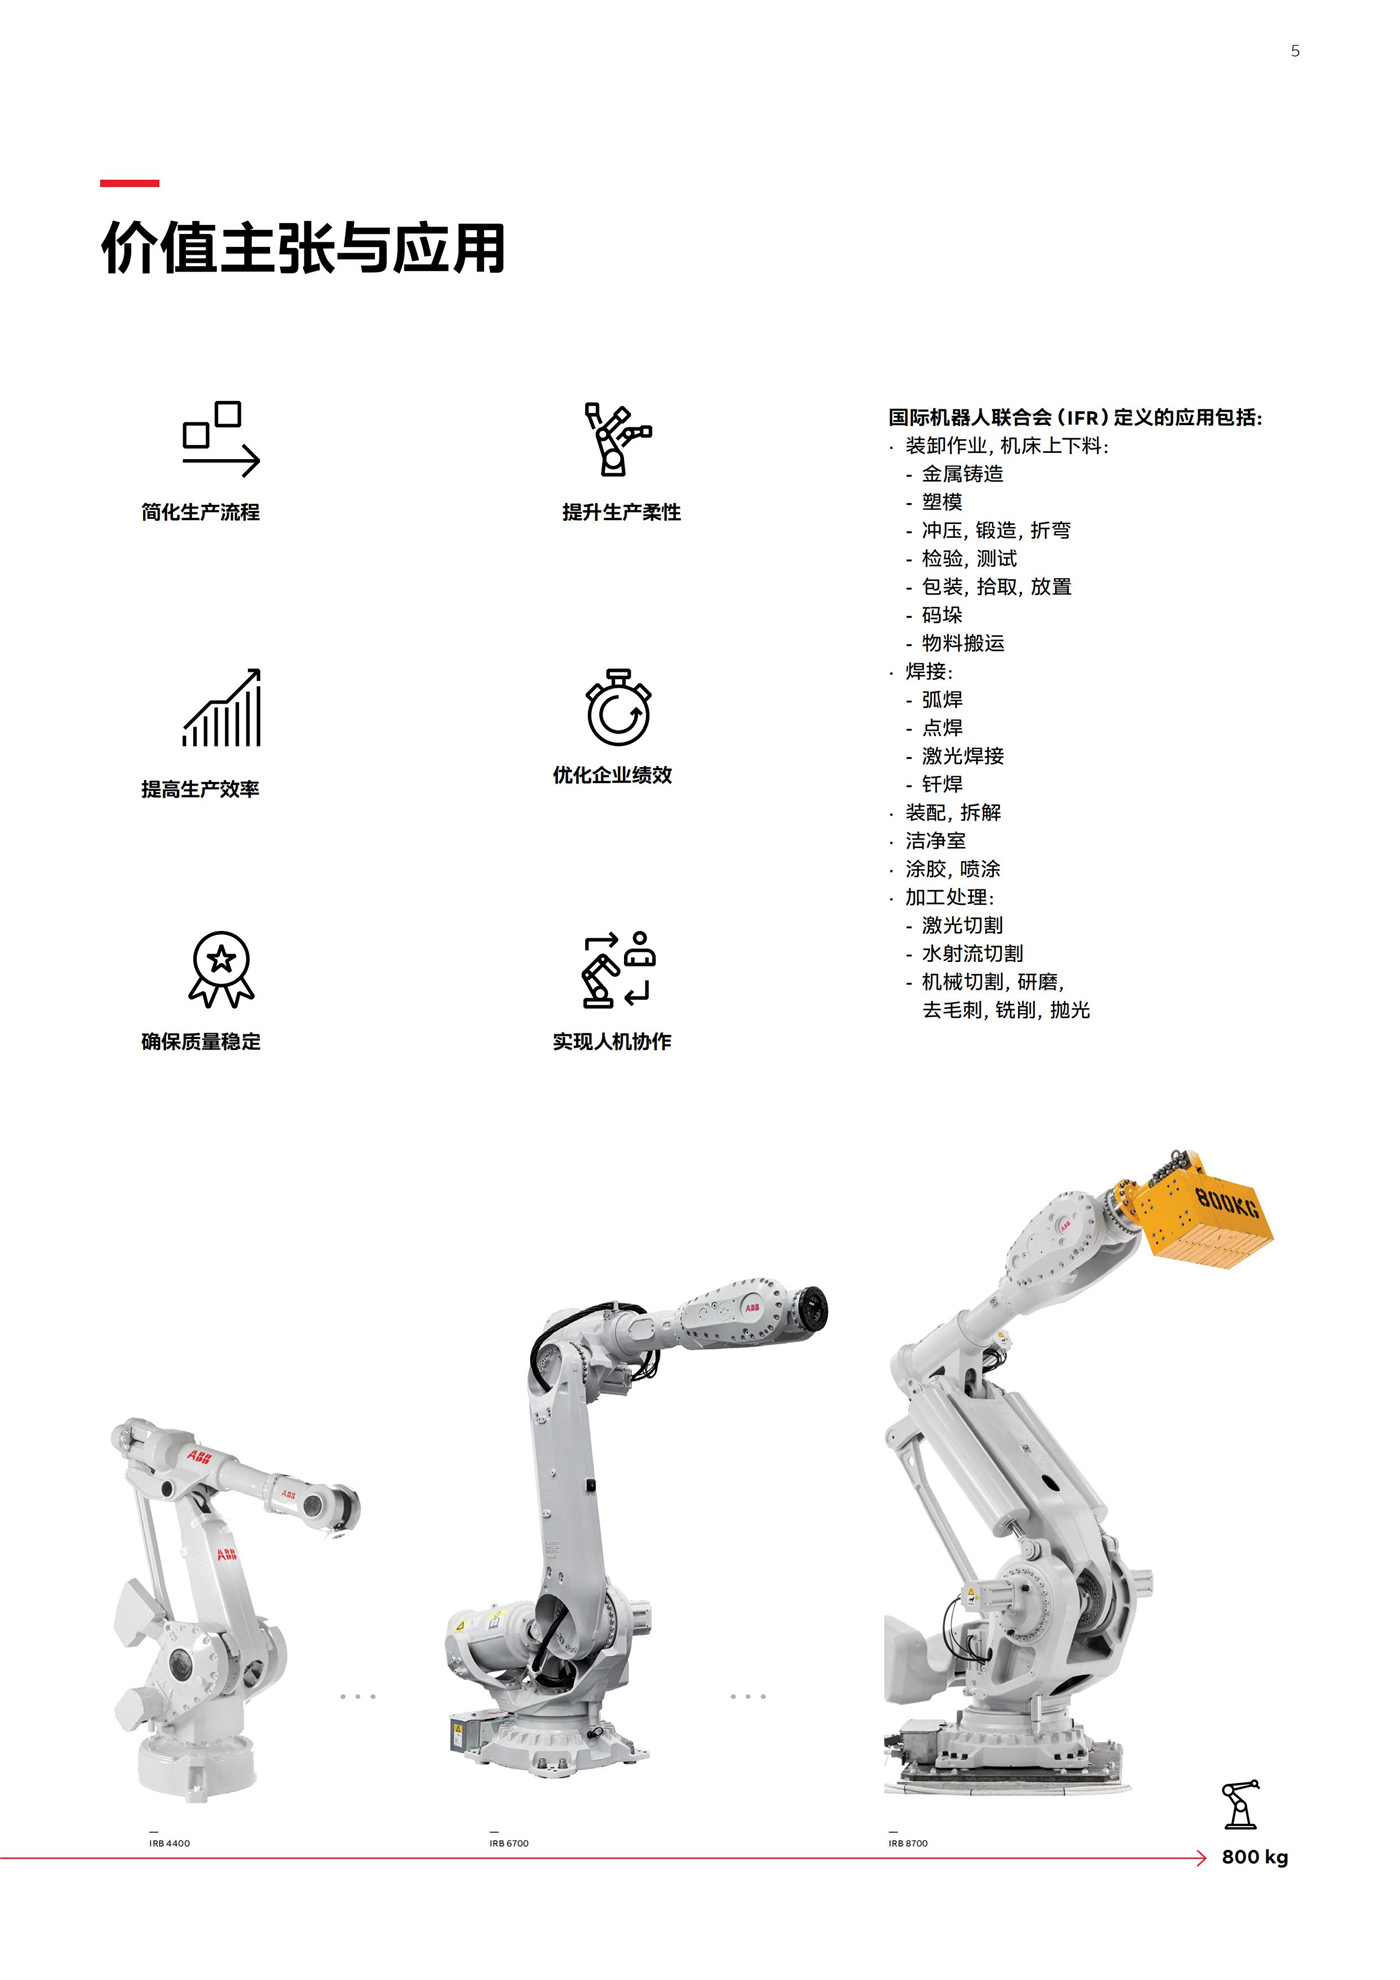 ABB-Robotics-ProductRange-20210607_ms_CN_04.jpg